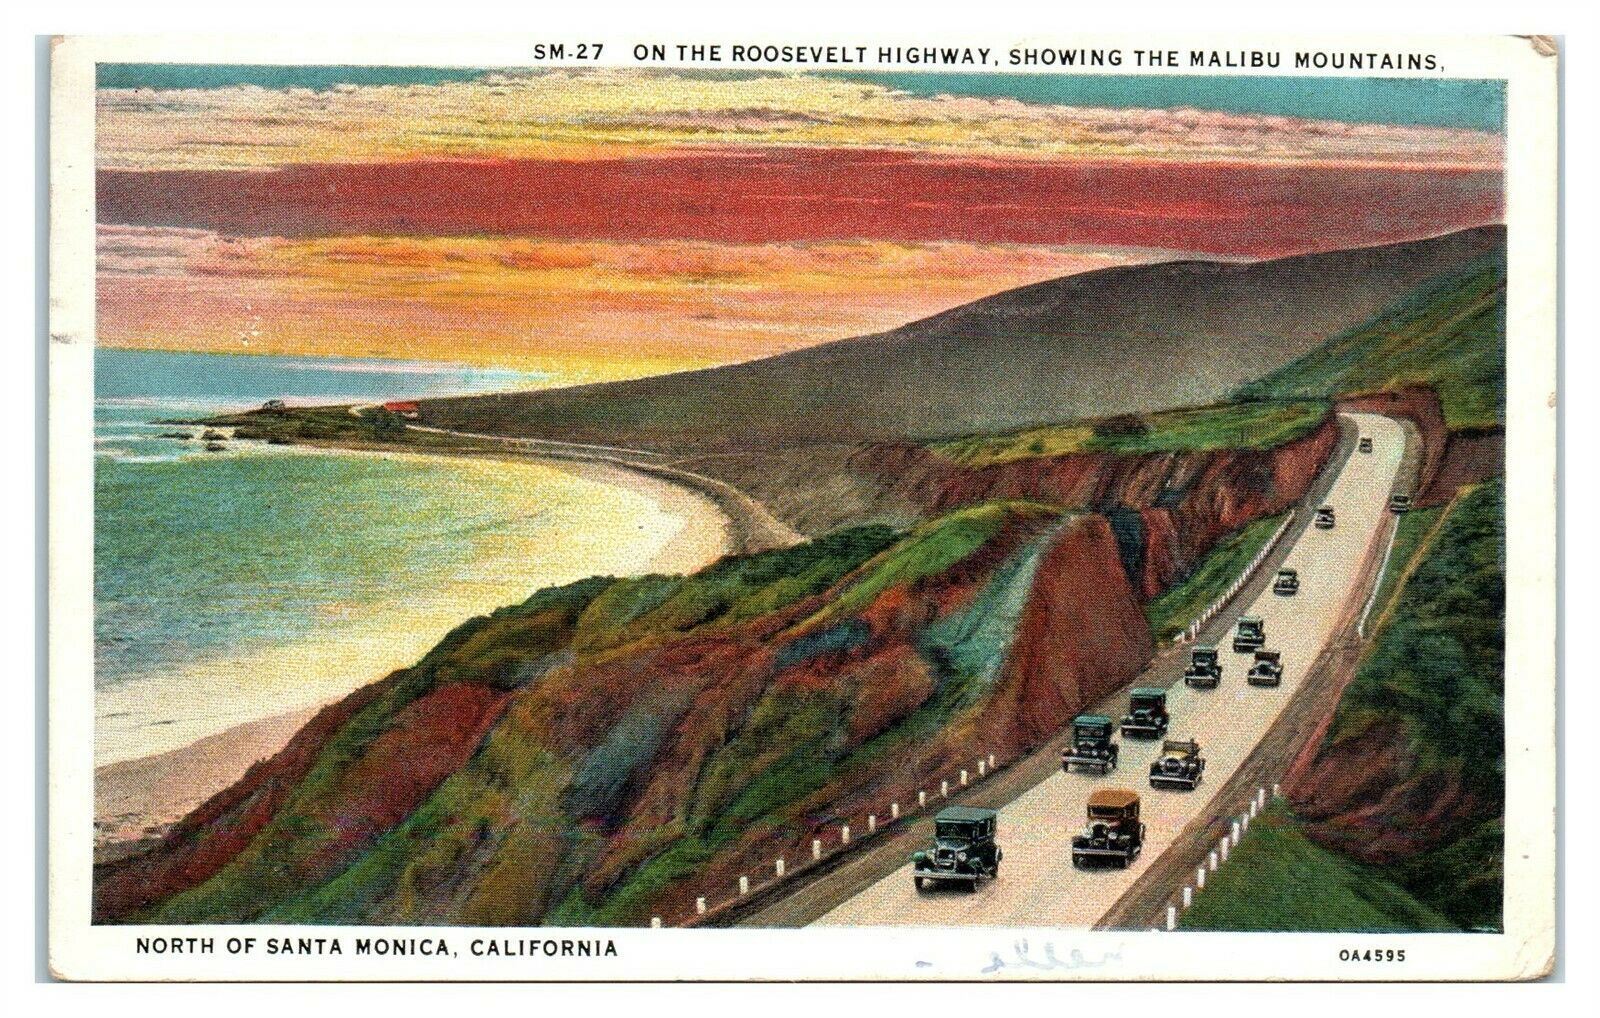 Roosevelt Highway And Malibu Mountains, North Of Santa Monica, Ca Postcard